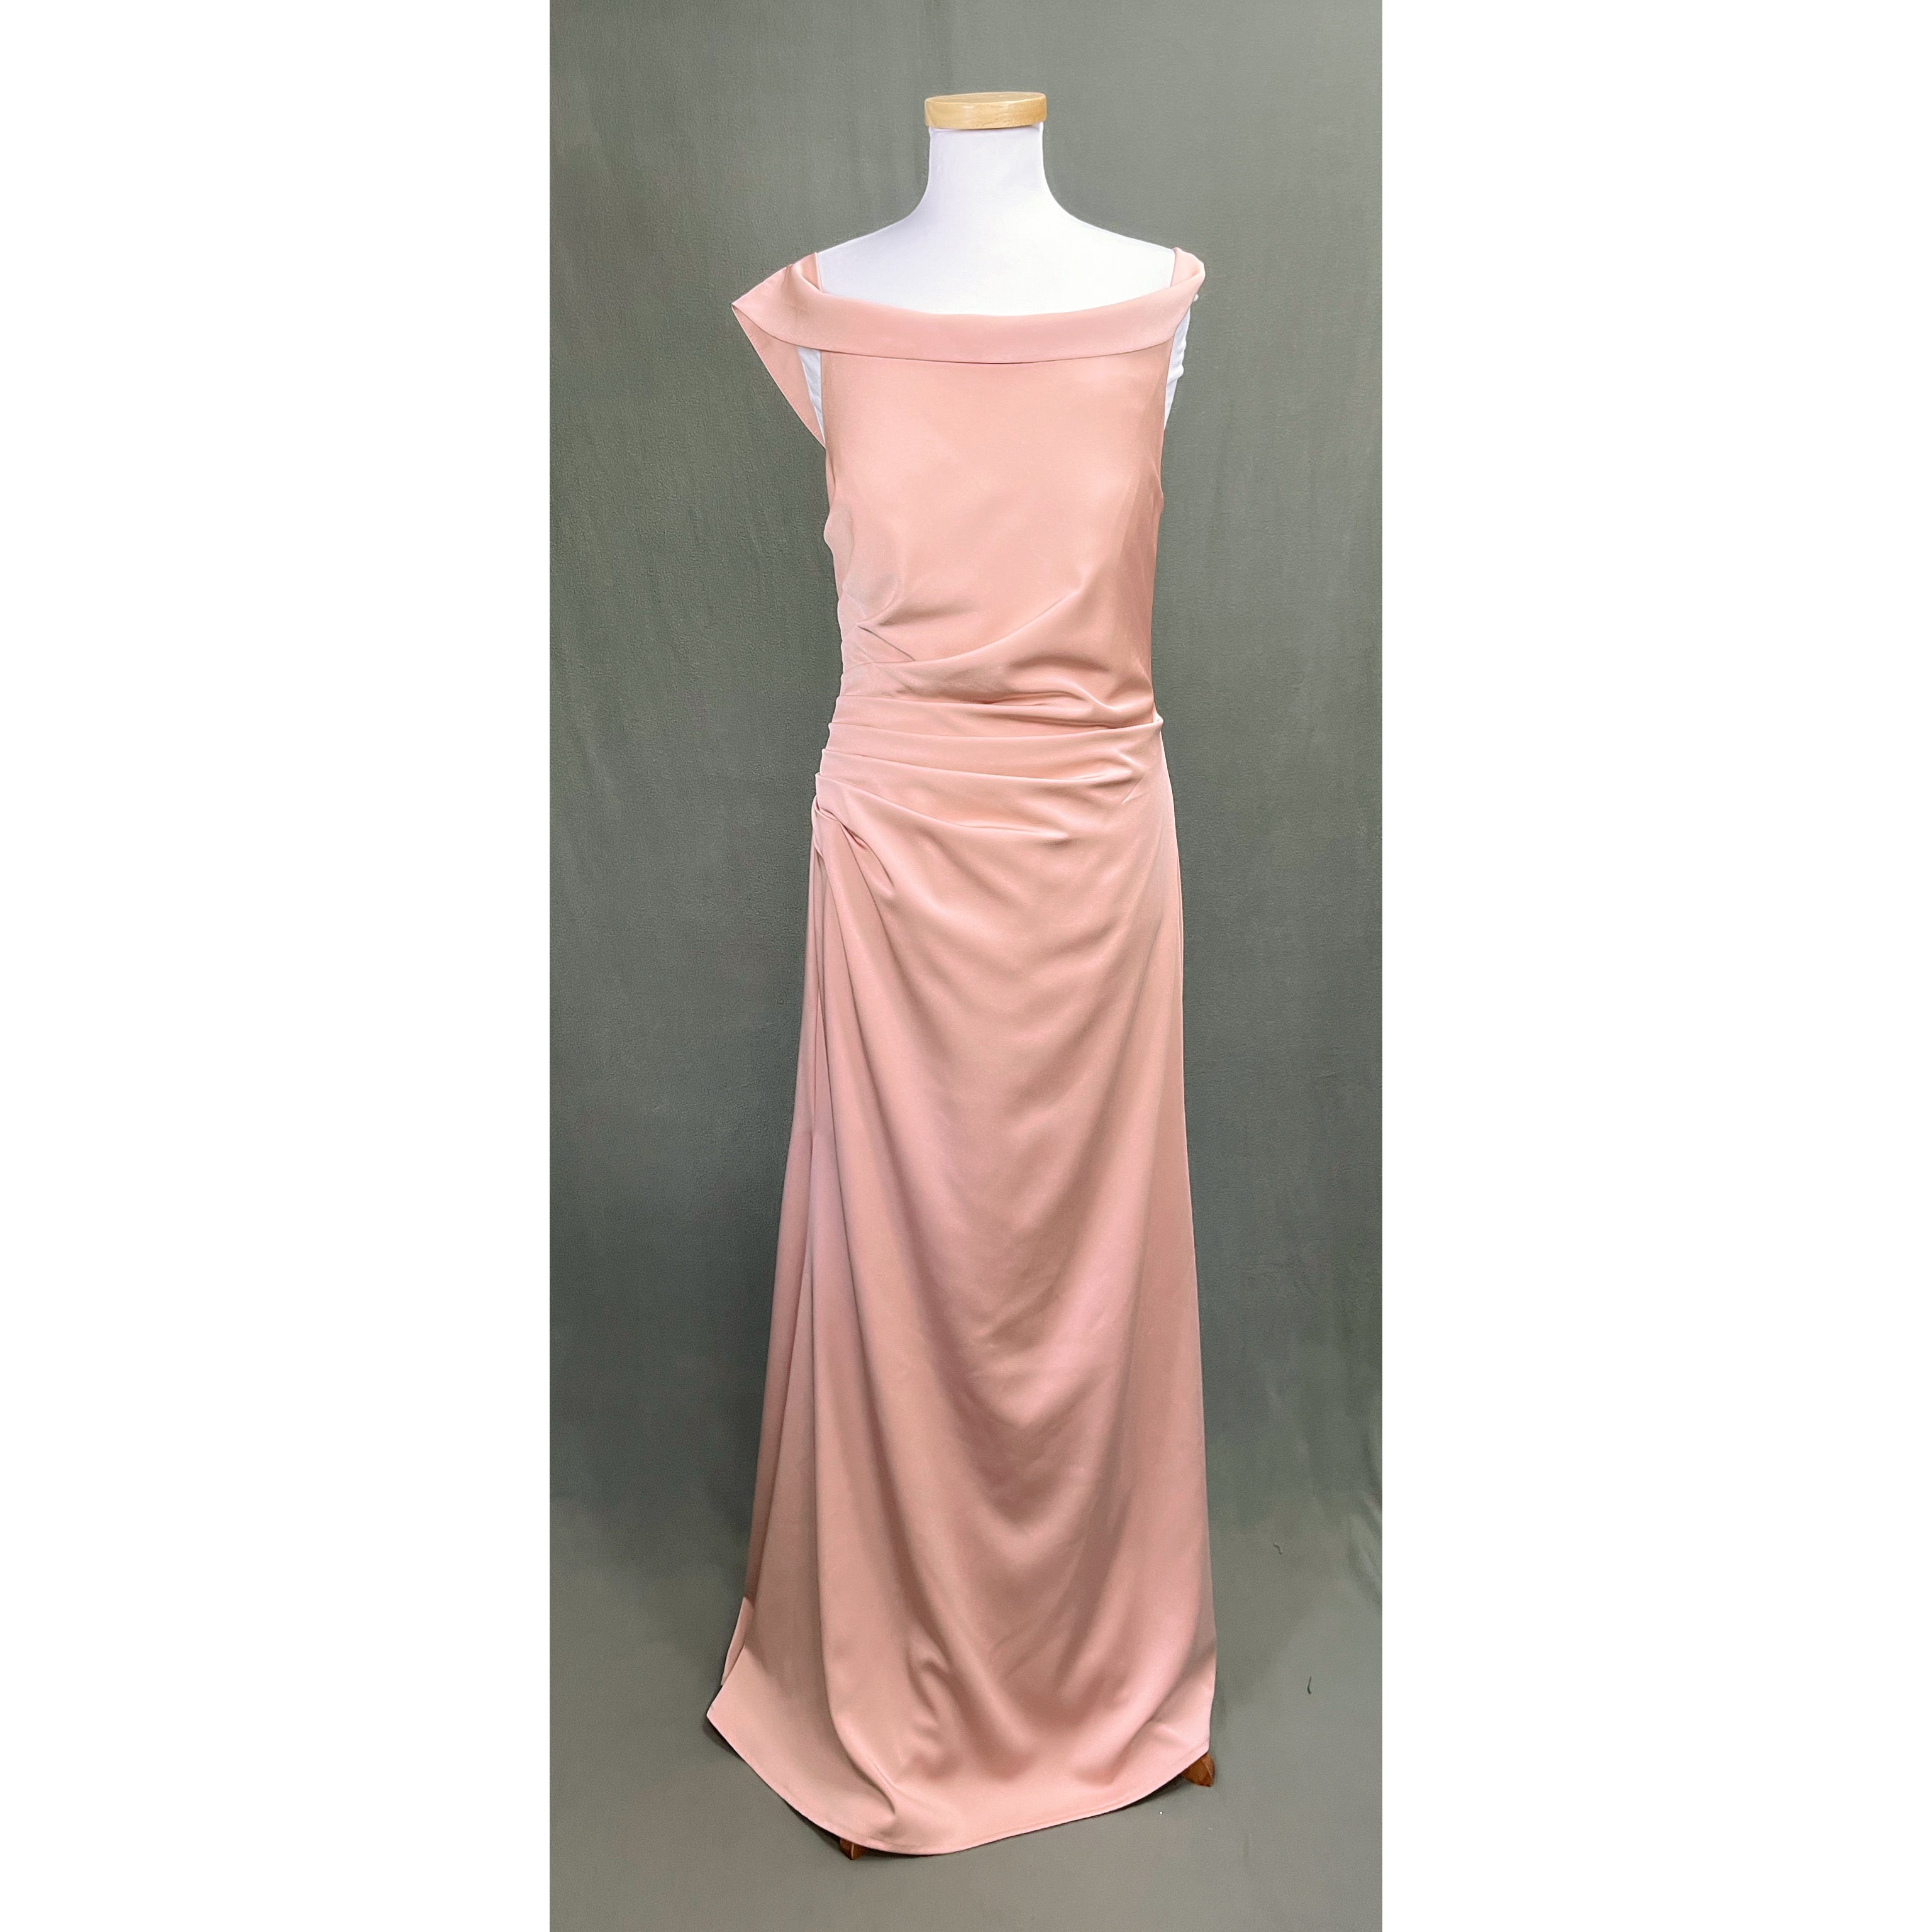 Allure blush dress, size 16